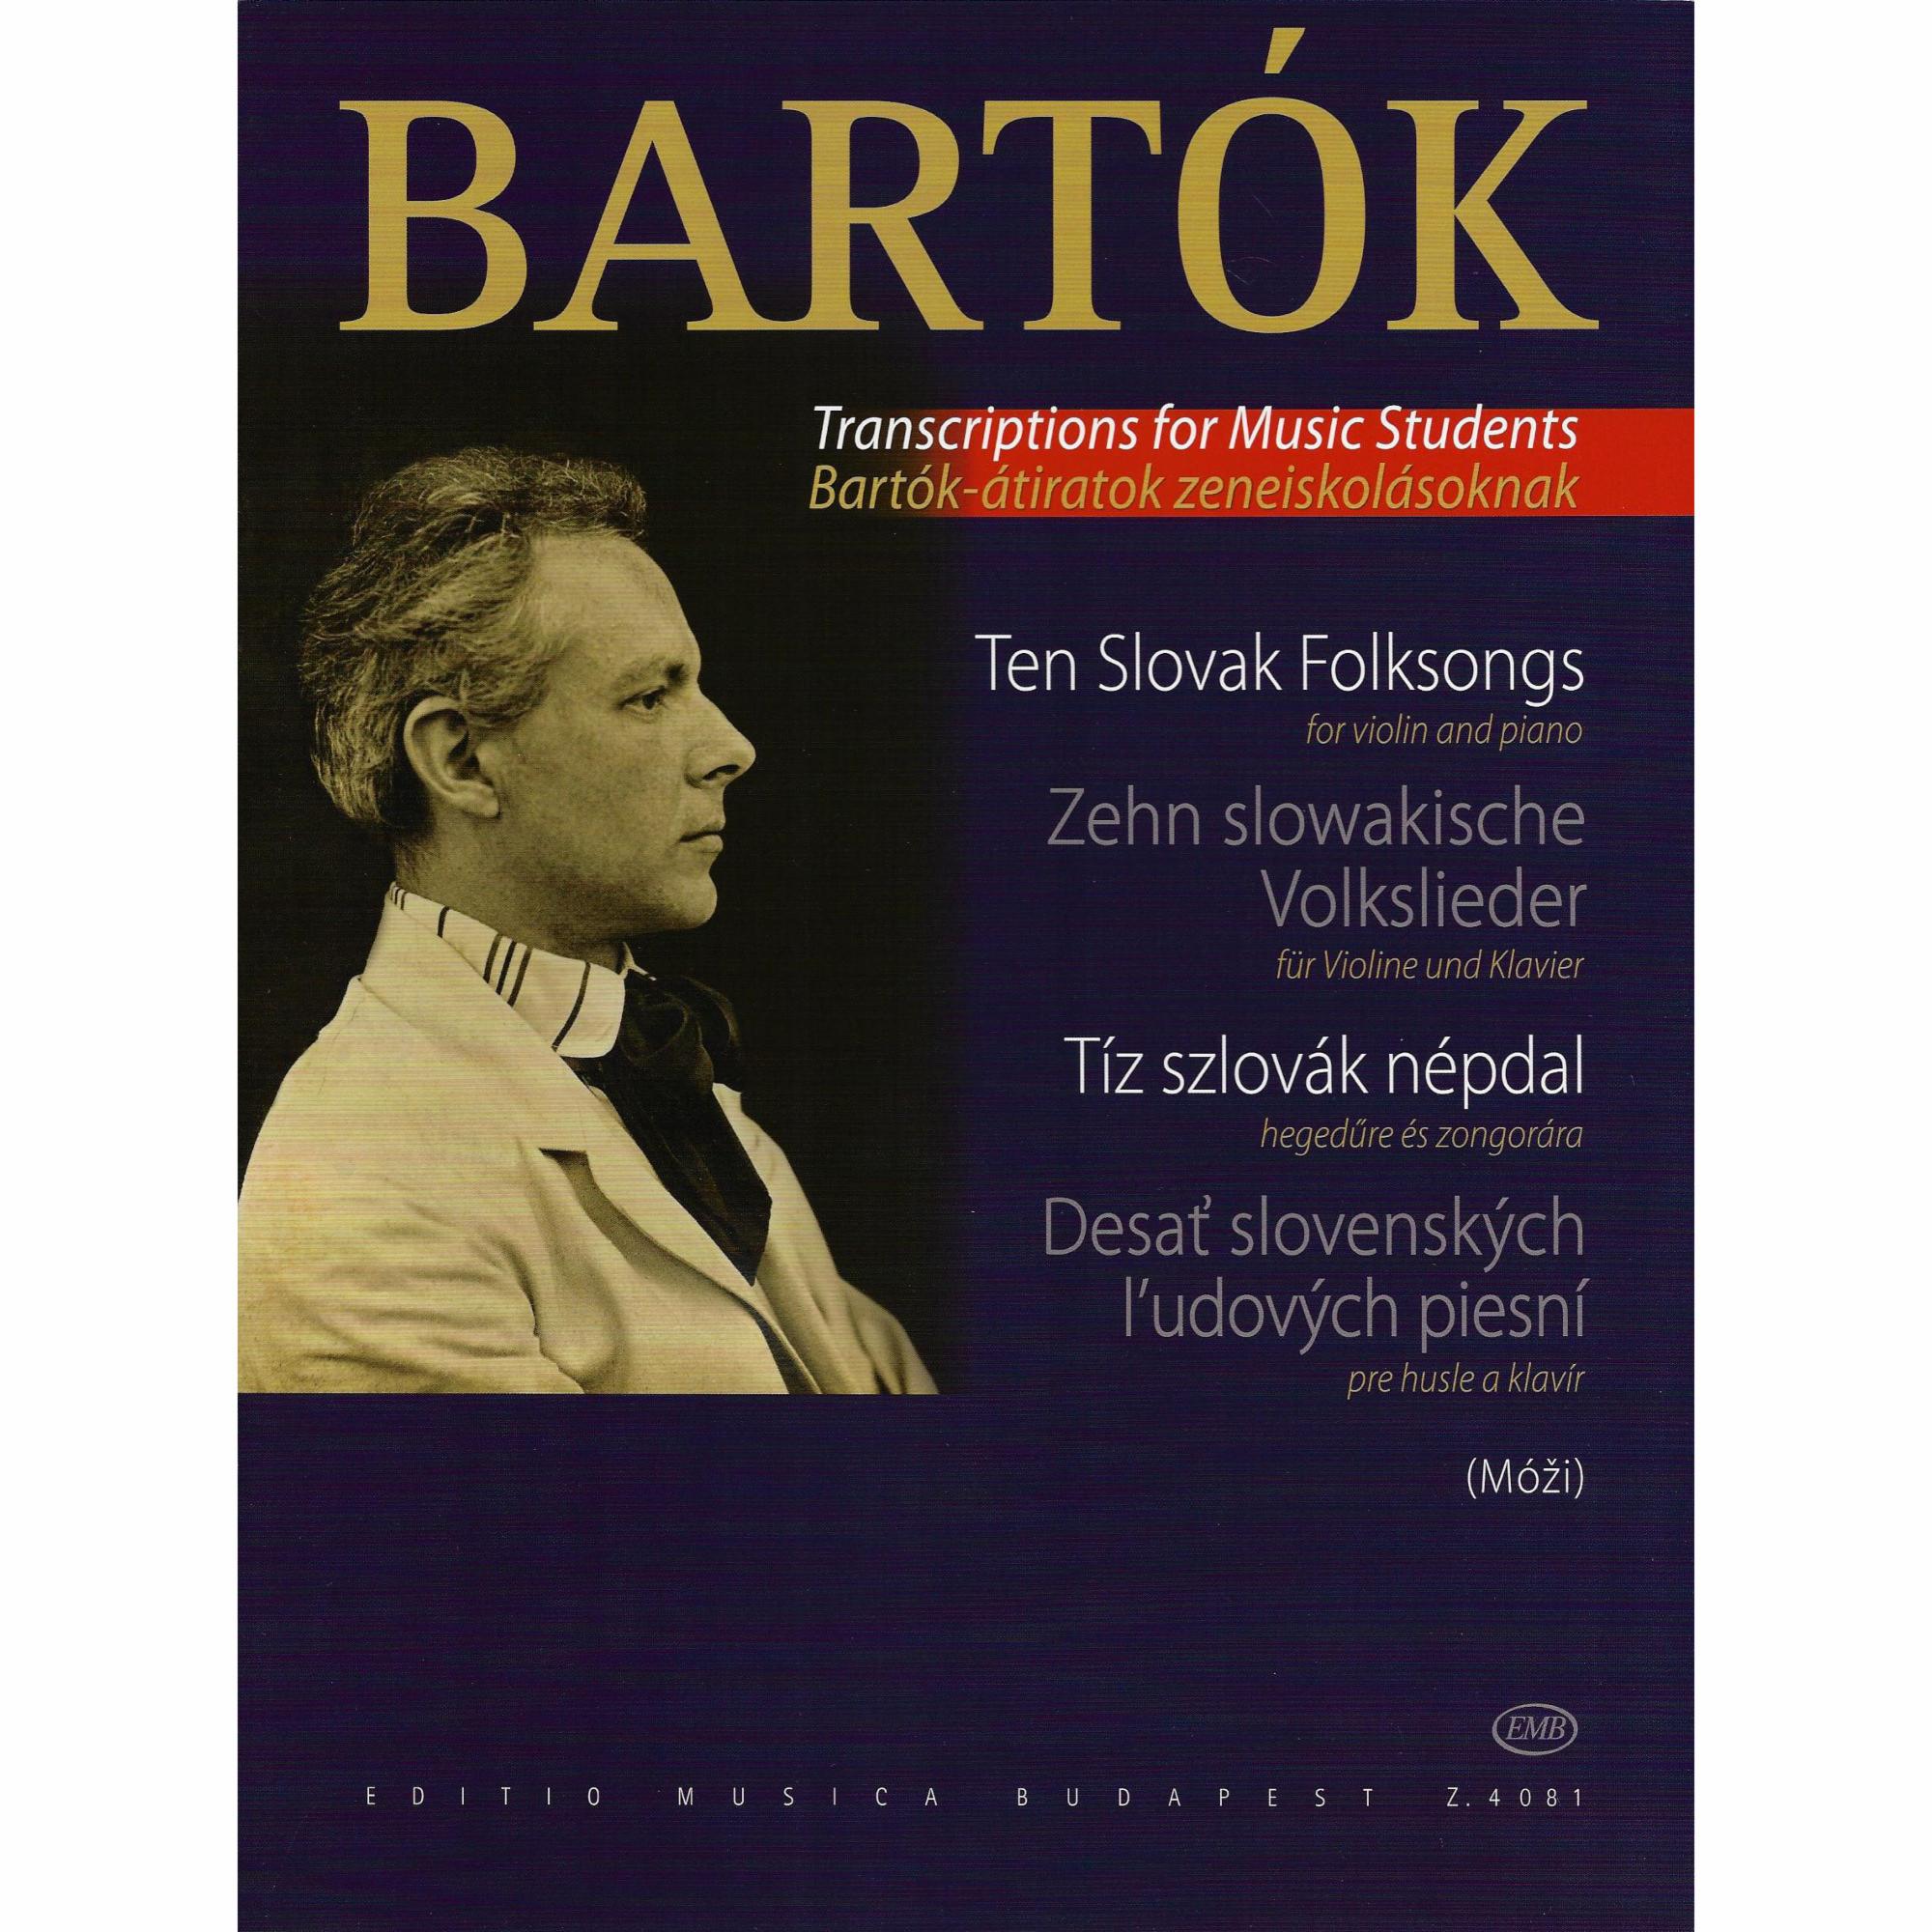 Bartok -- Ten Slovak Folksongs for Violin and Piano